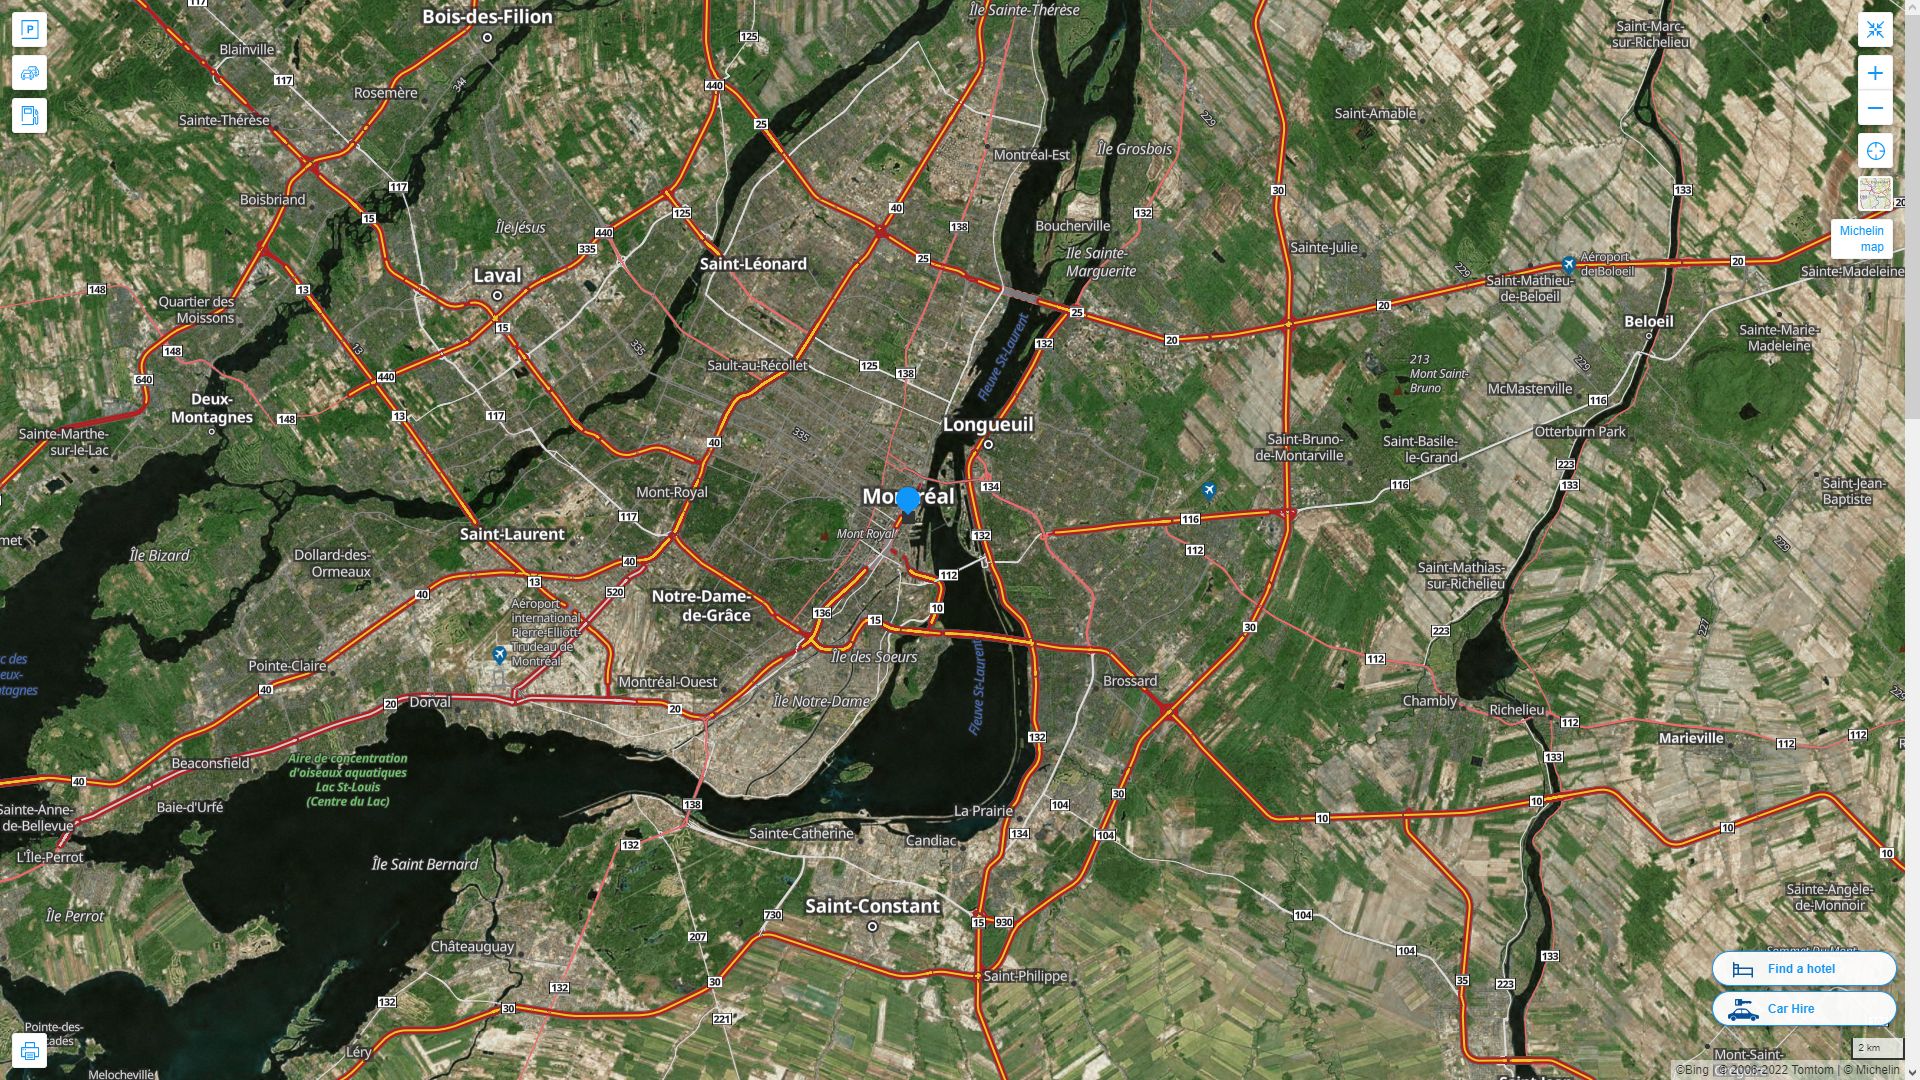 Montreal Canada Autoroute et carte routiere avec vue satellite